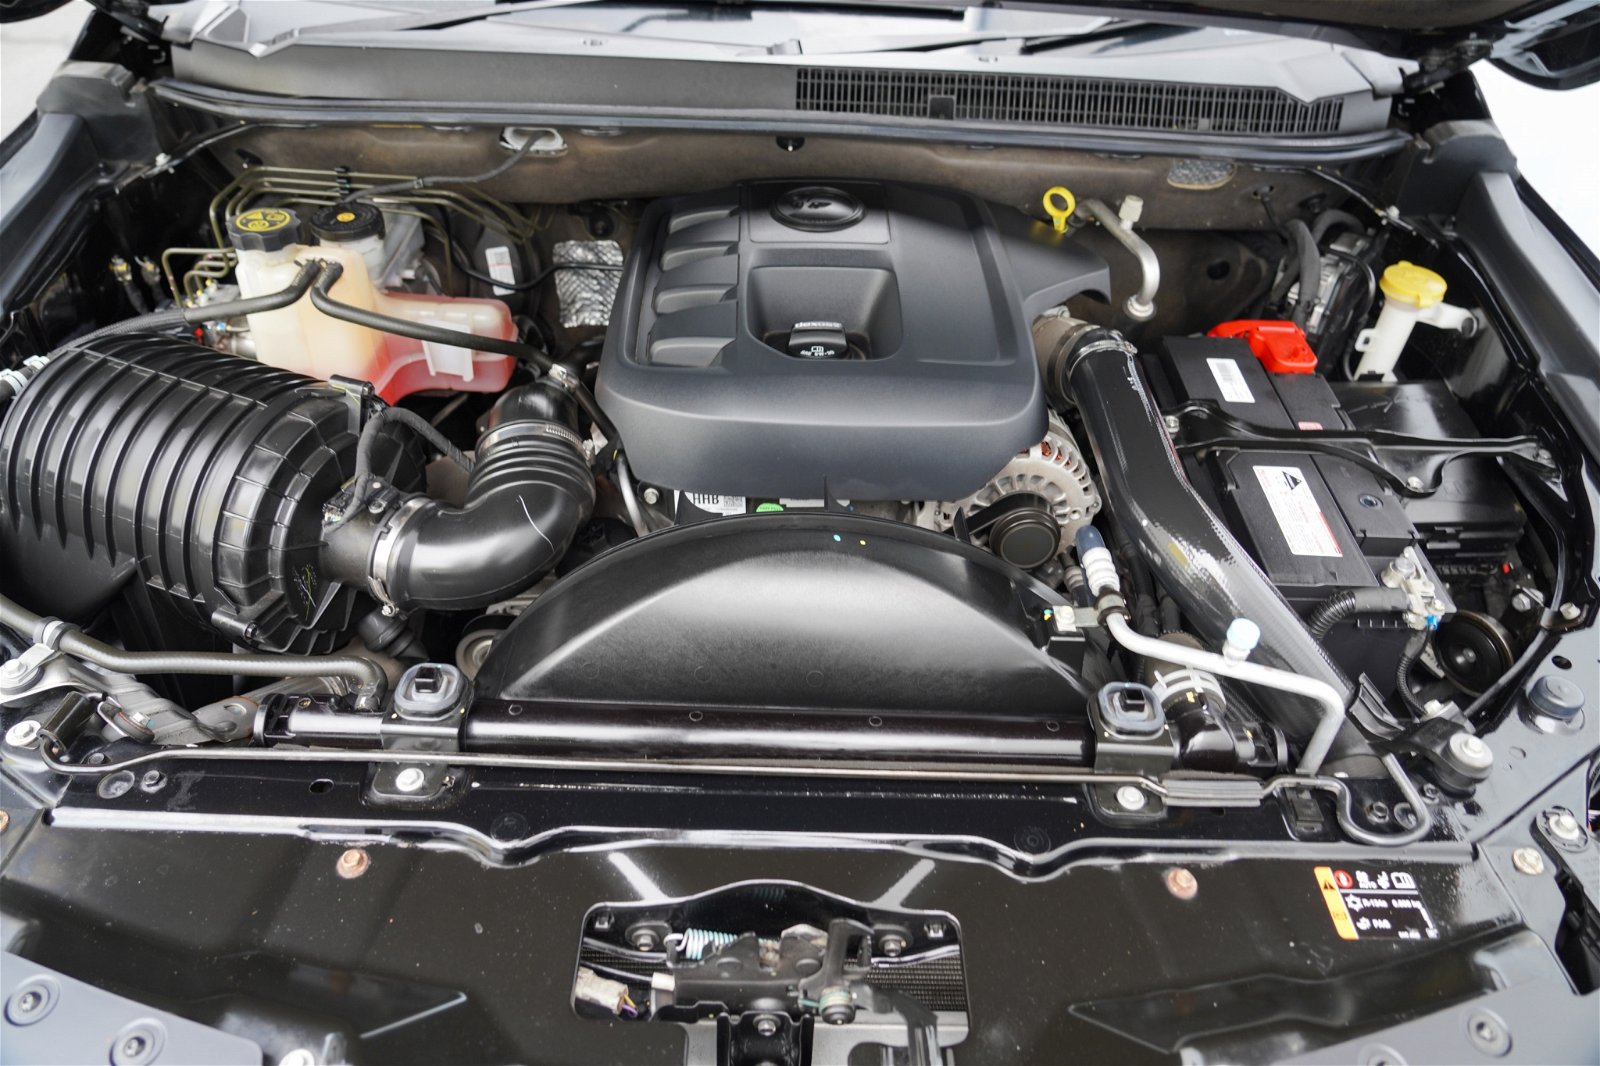 2019 Holden Colorado HSV Sportscat+ 2.8P 6A 4Dr Ute